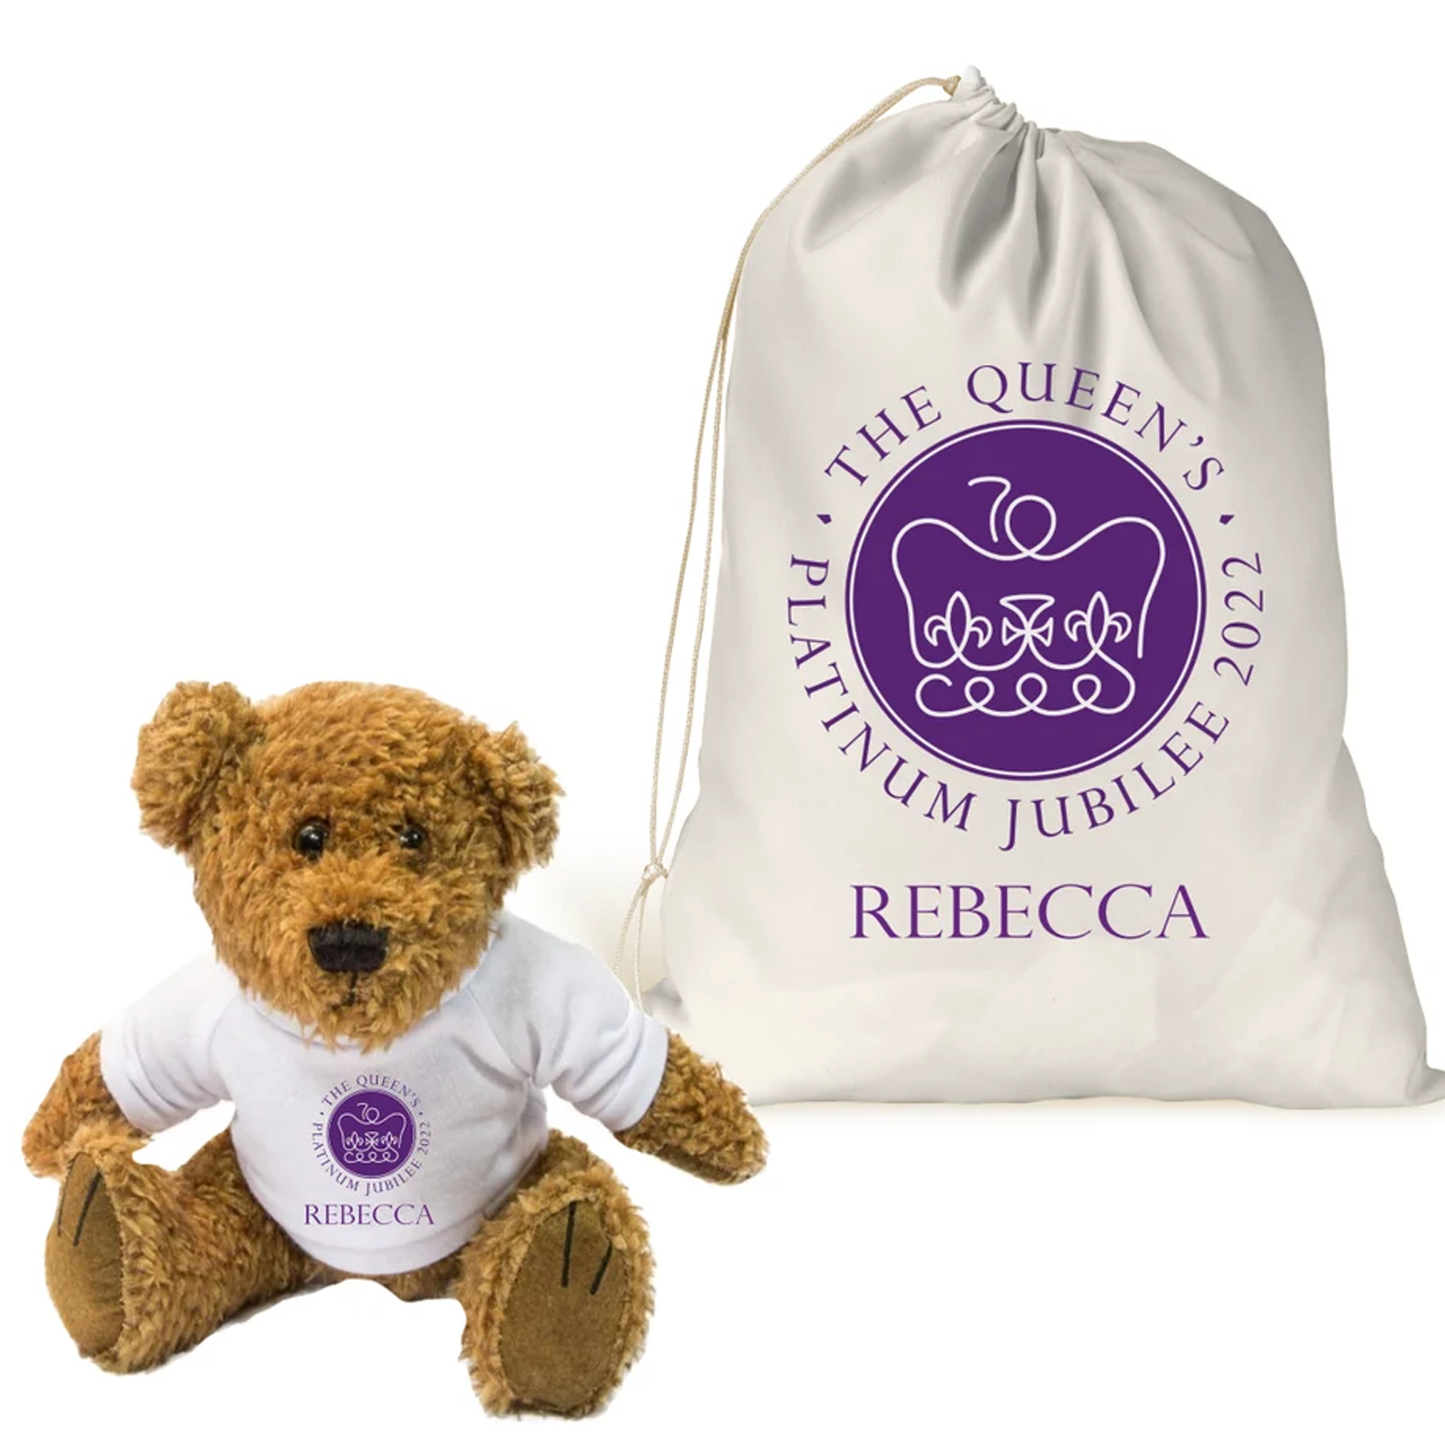 Queen's Jubilee Commemorative Keepsake Teddy Bear with Bag